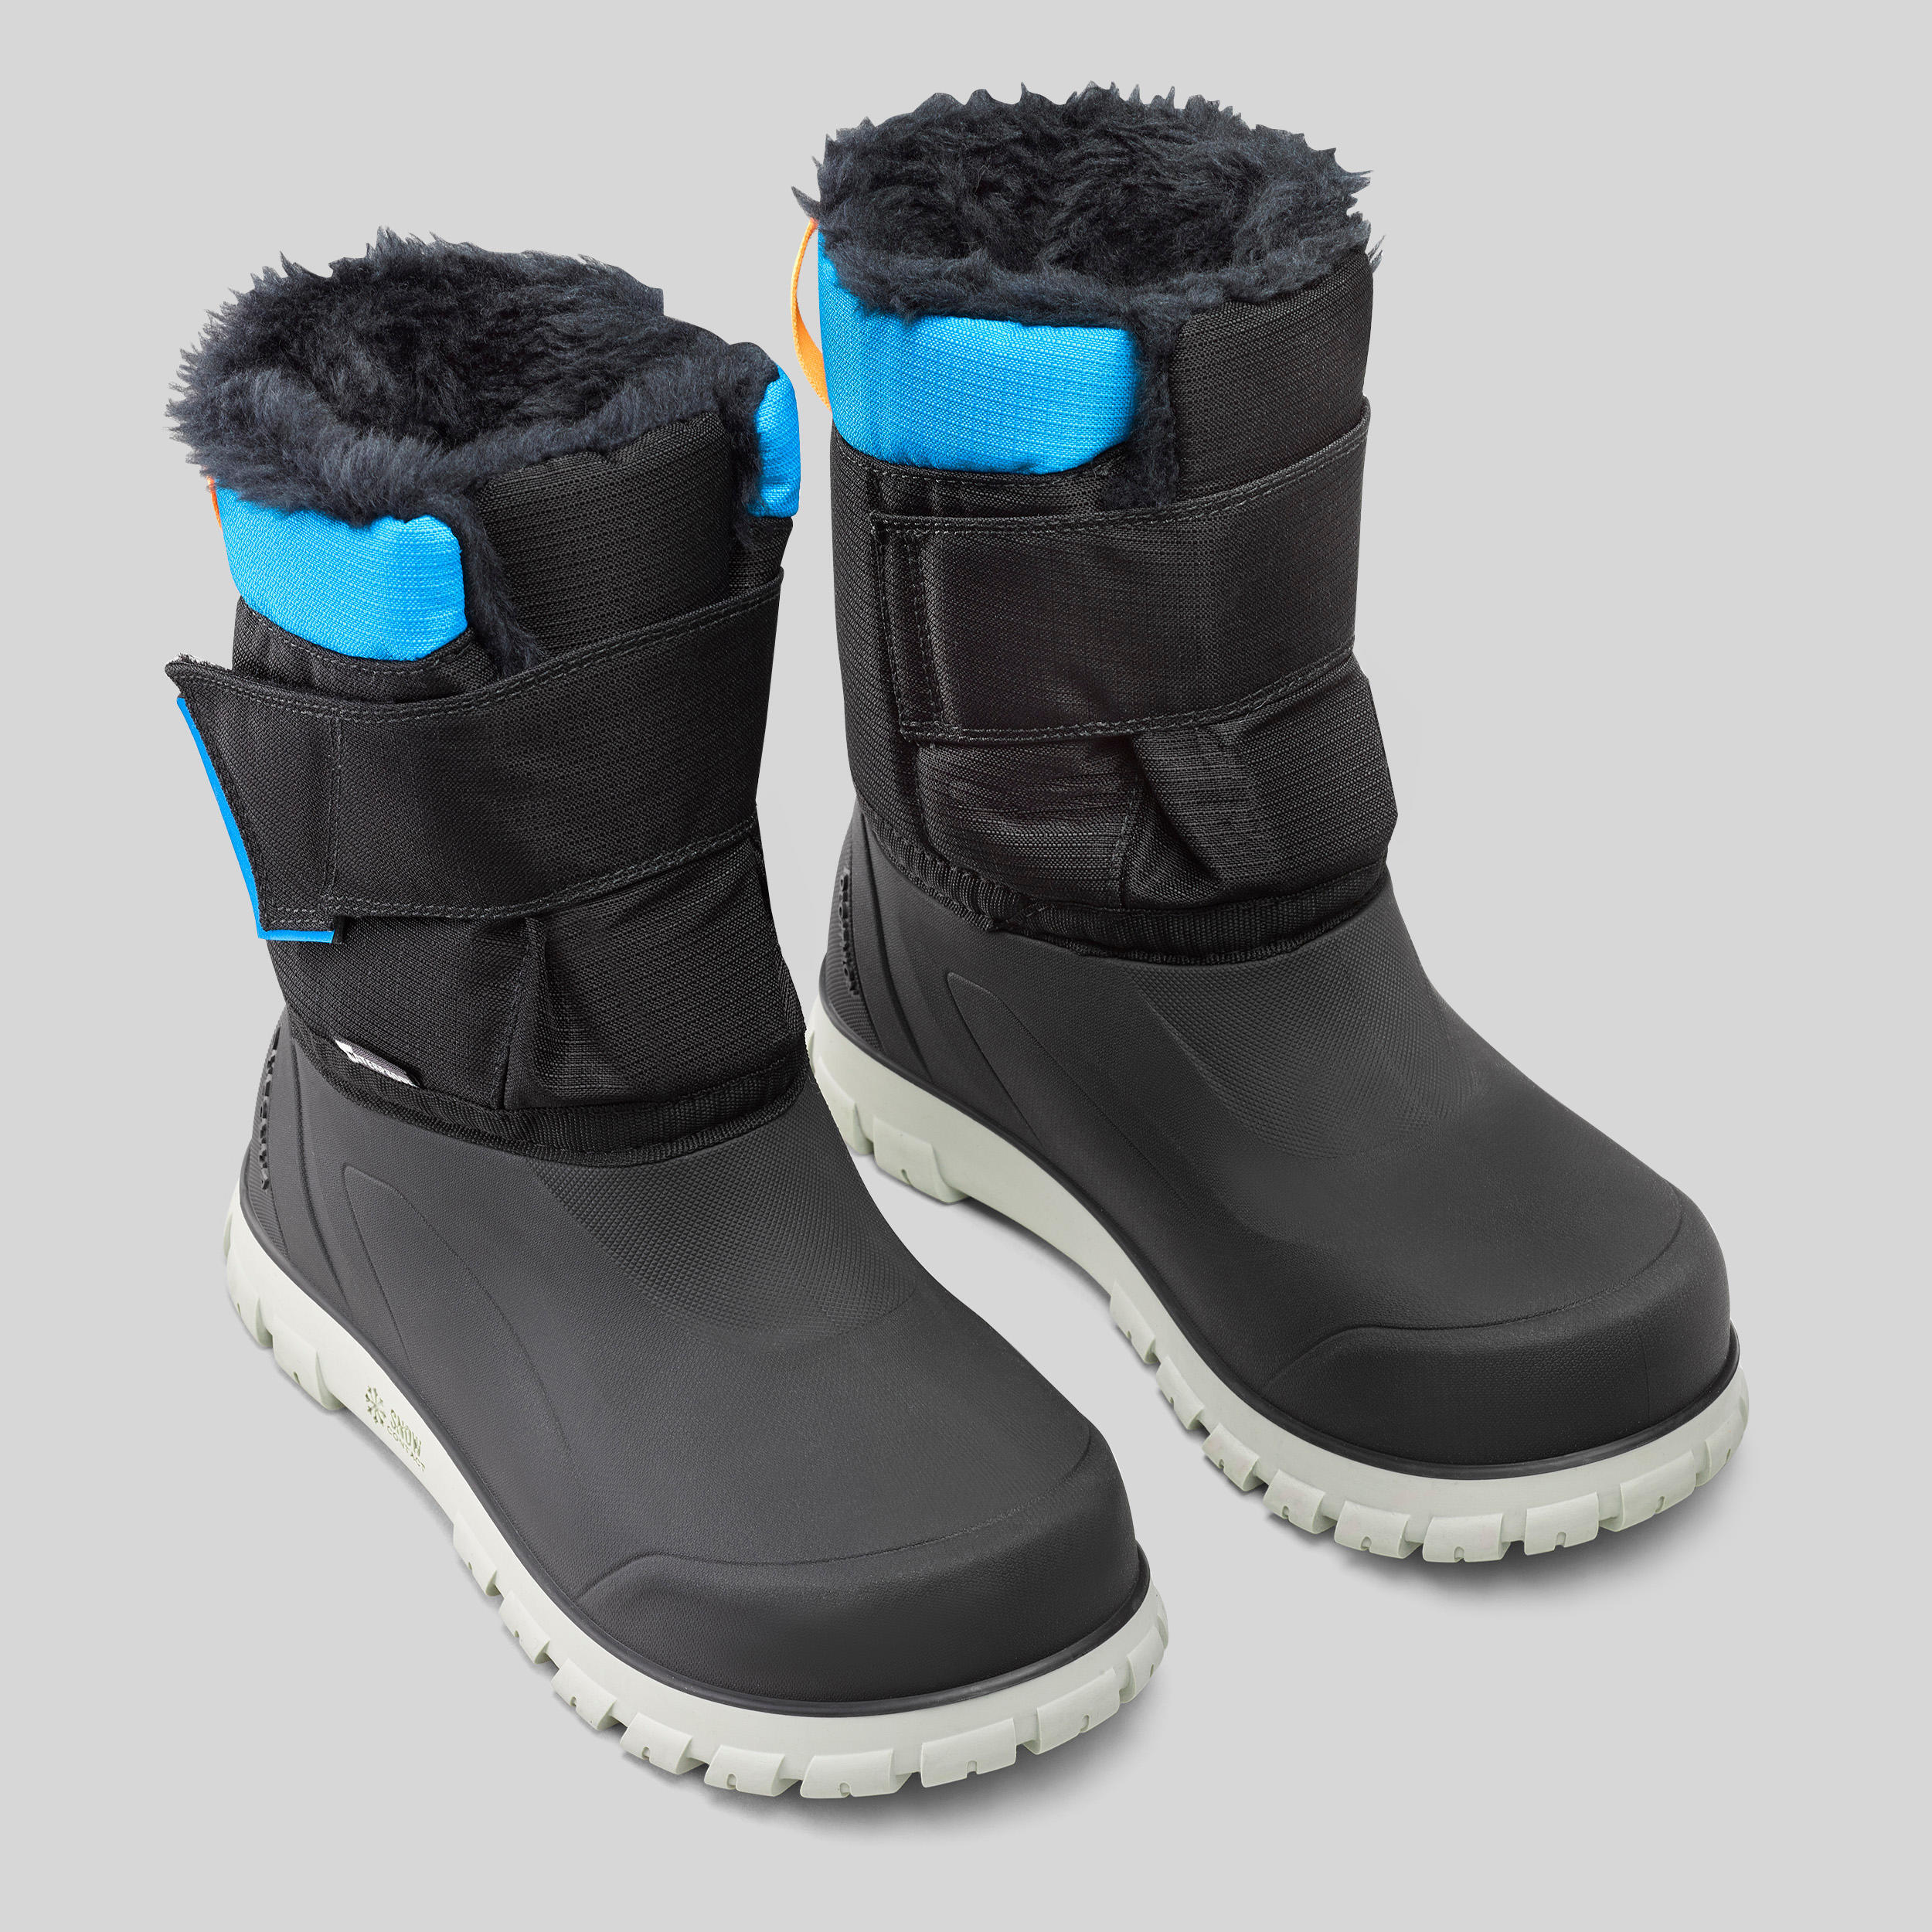 Kids’ warm waterproof snow hiking boots SH500 - Velcro Size 7 - 5.5 4/7